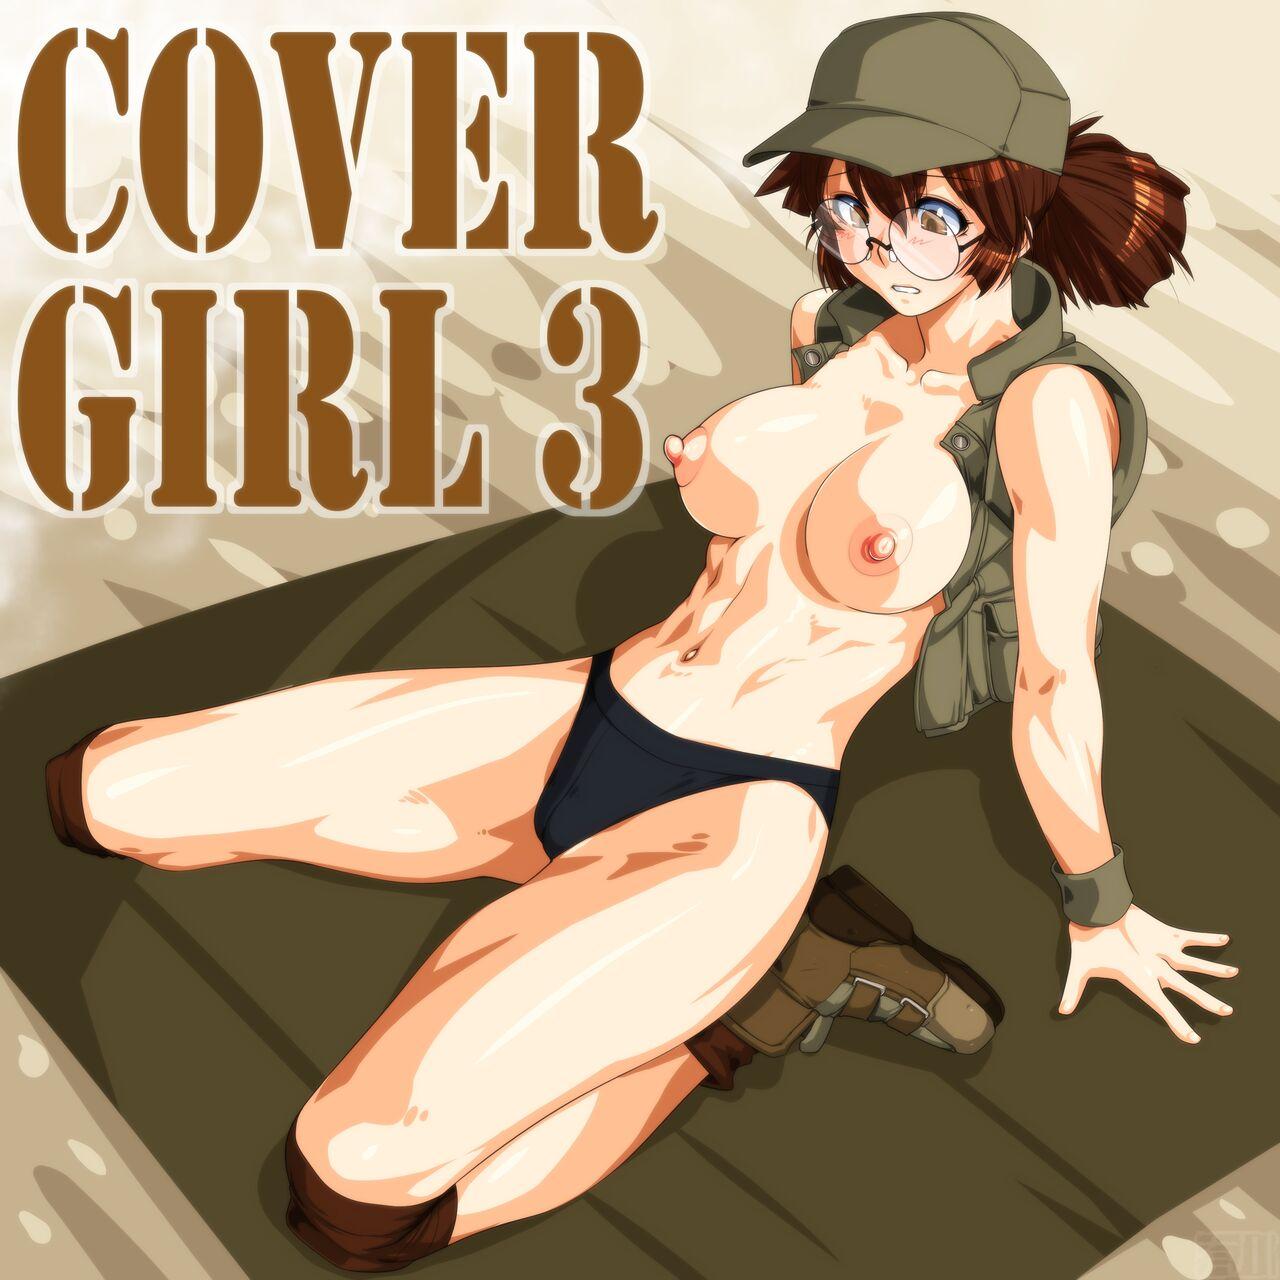 COVER GIRL 3 12